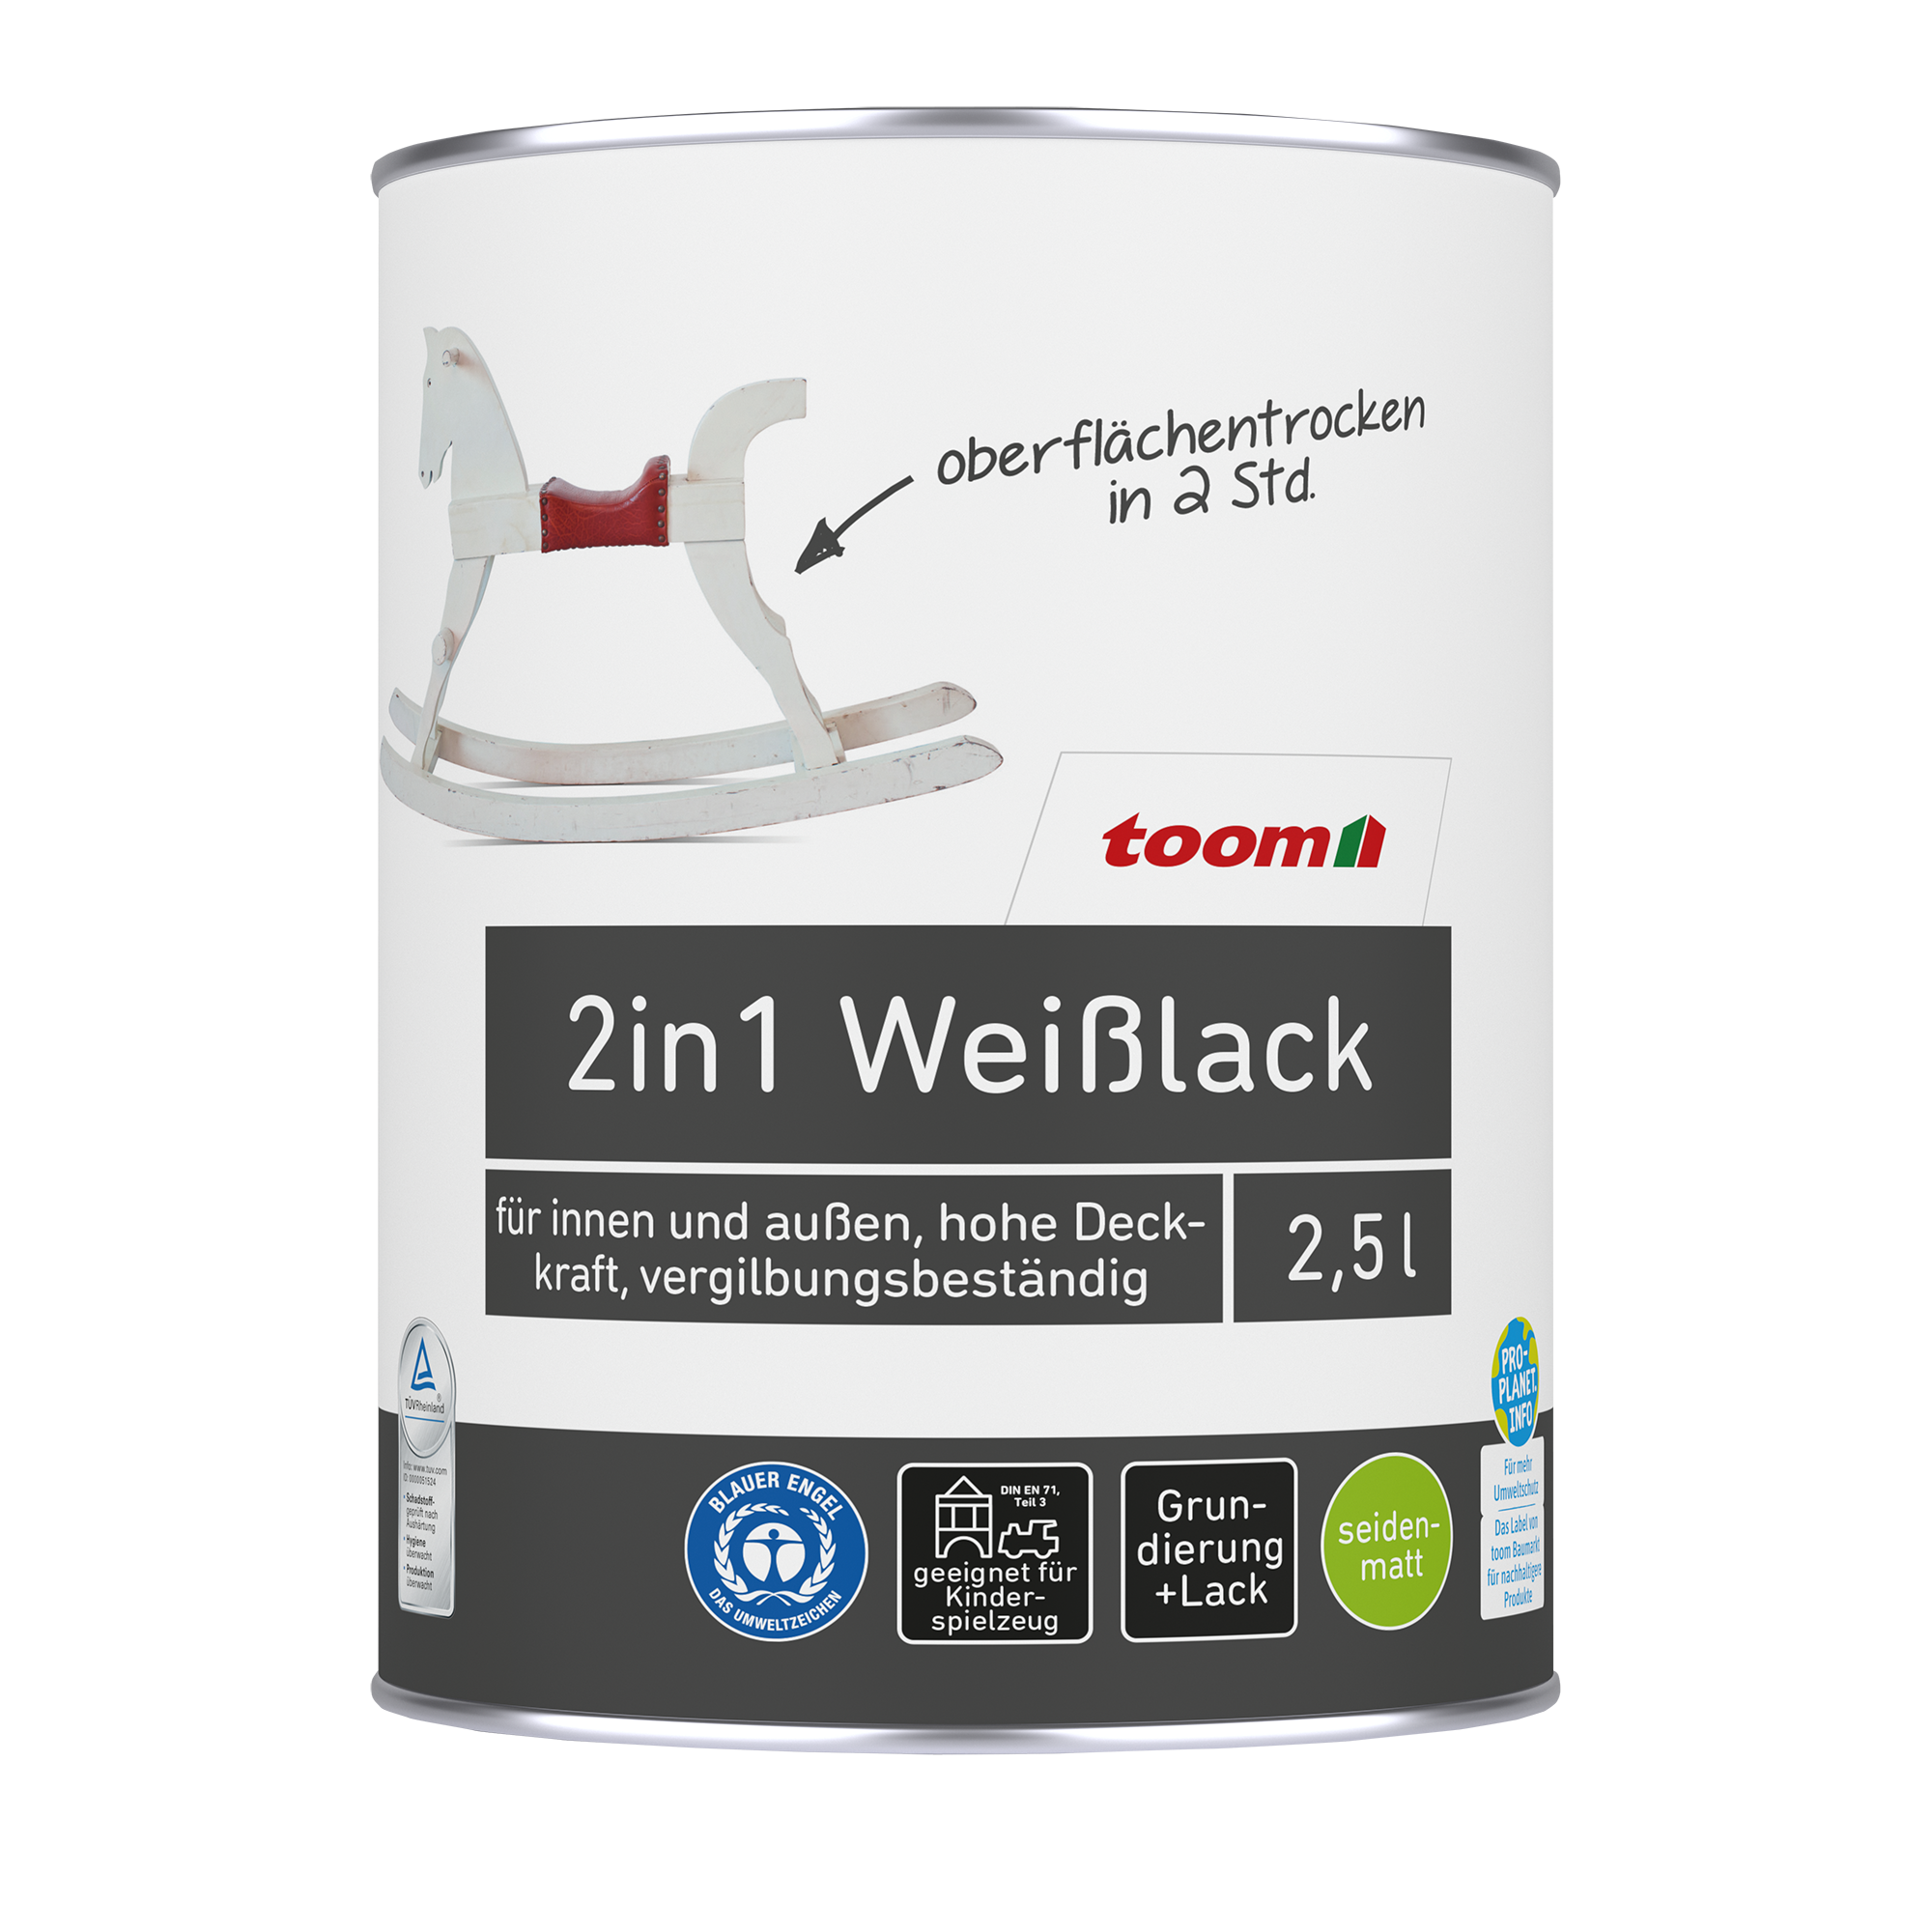 2in1 Weißlack seidenmatt 2,5 l + product picture